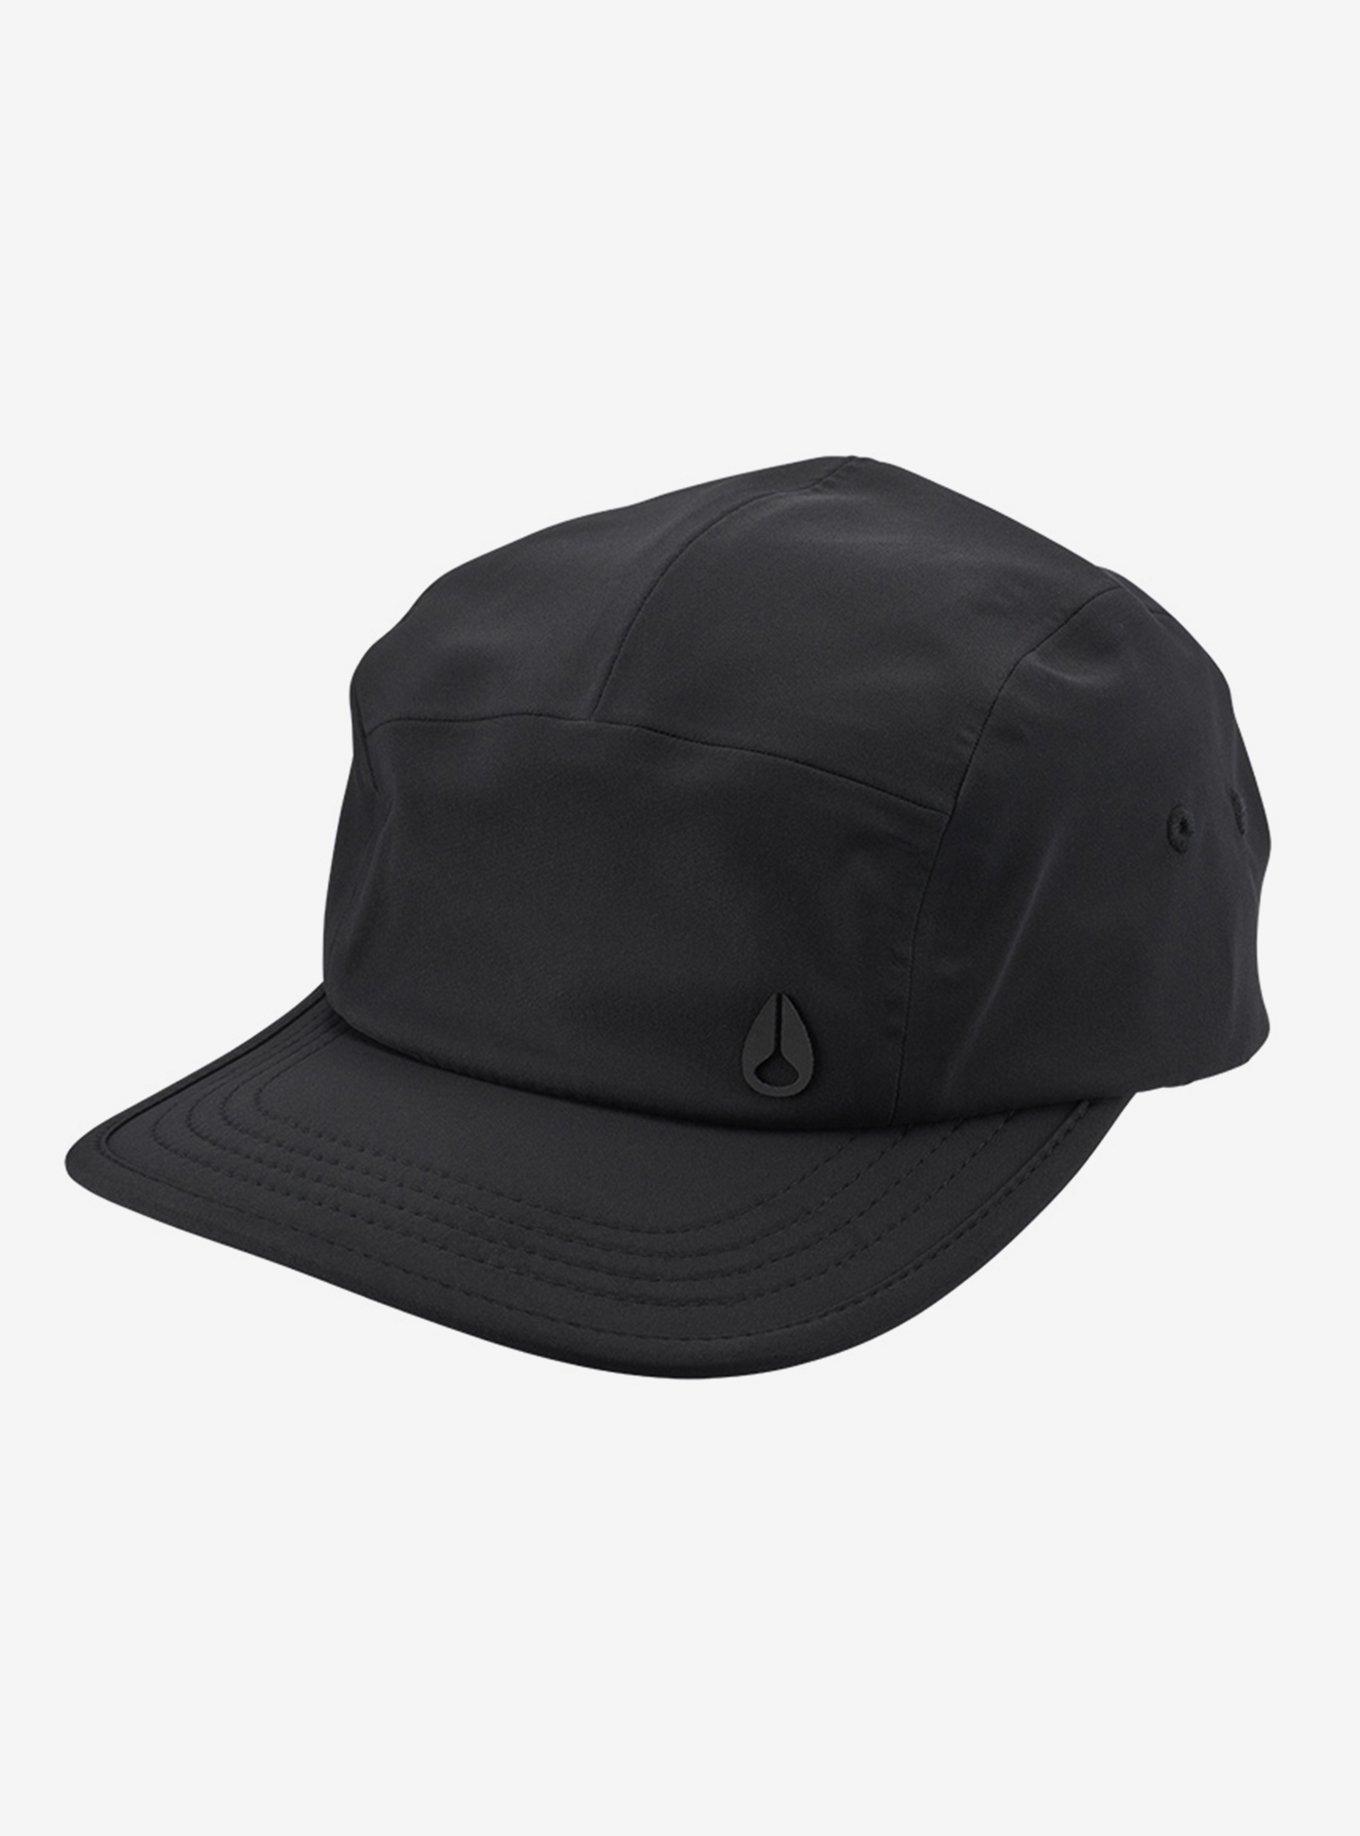 Nixon Mikey Tech Strapback All Black Snapcap Hat | Hot Topic